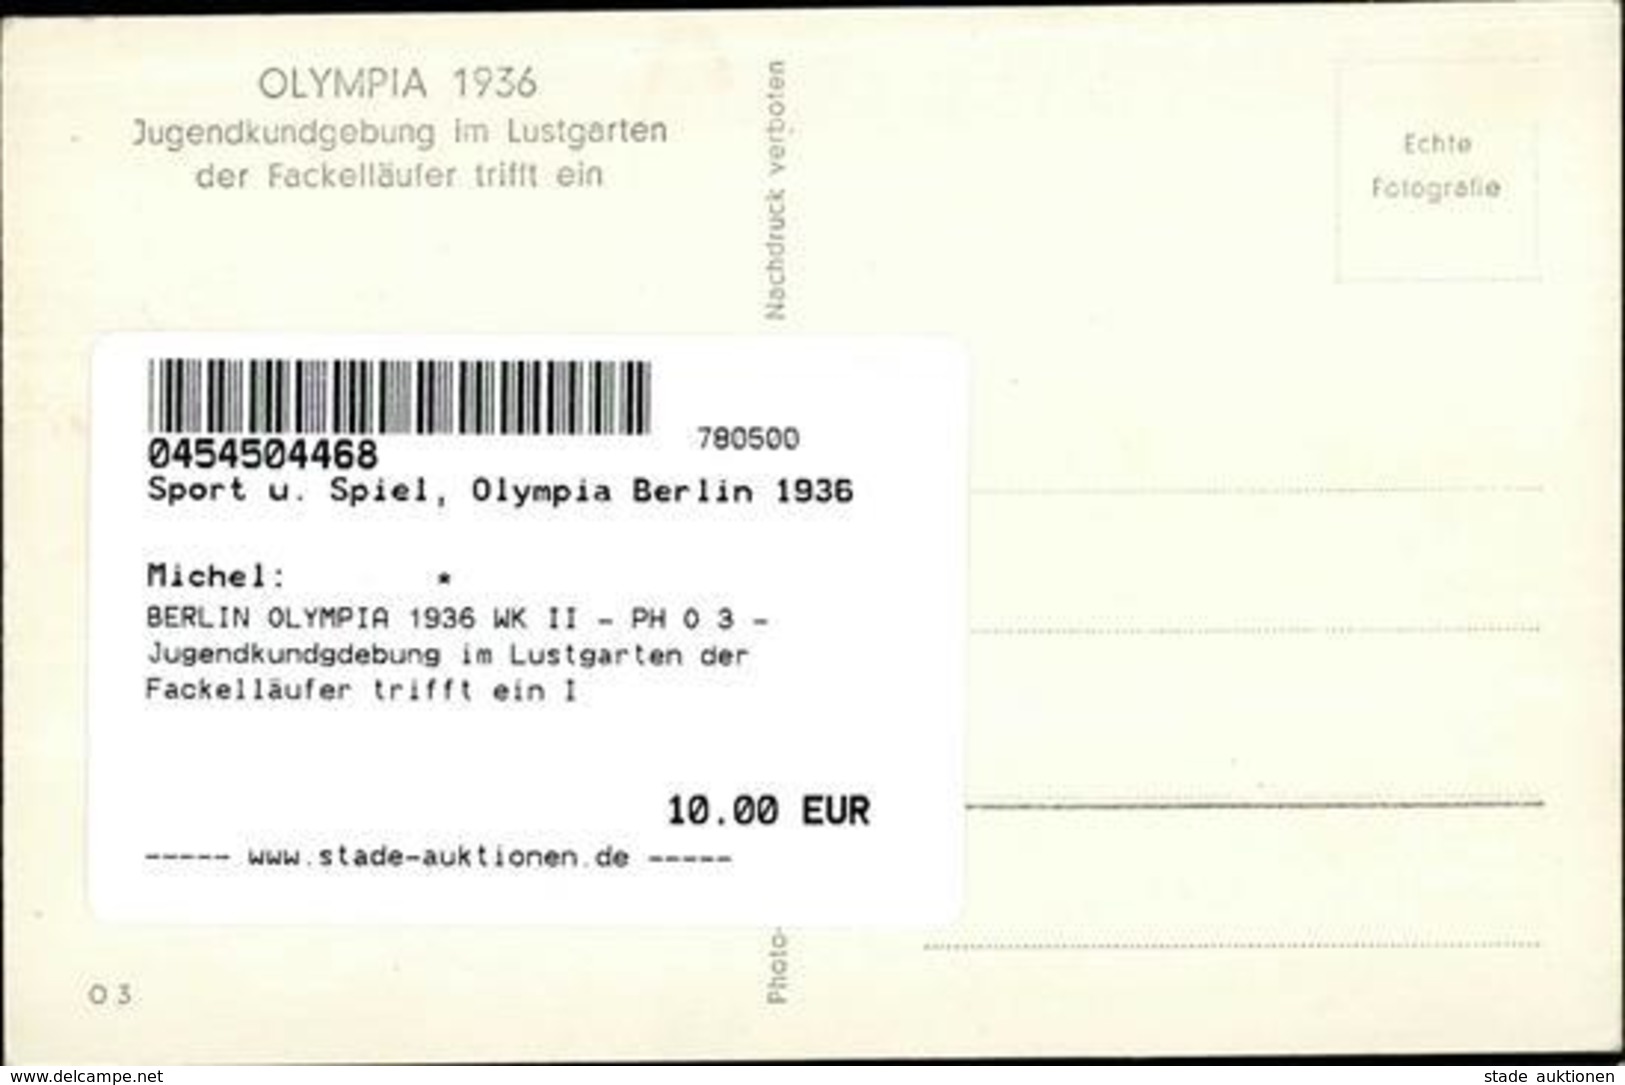 BERLIN OLYMPIA 1936 WK II - PH O 3 - Jugendkundgdebung Im Lustgarten Der Fackelläufer Trifft Ein I - Olympic Games